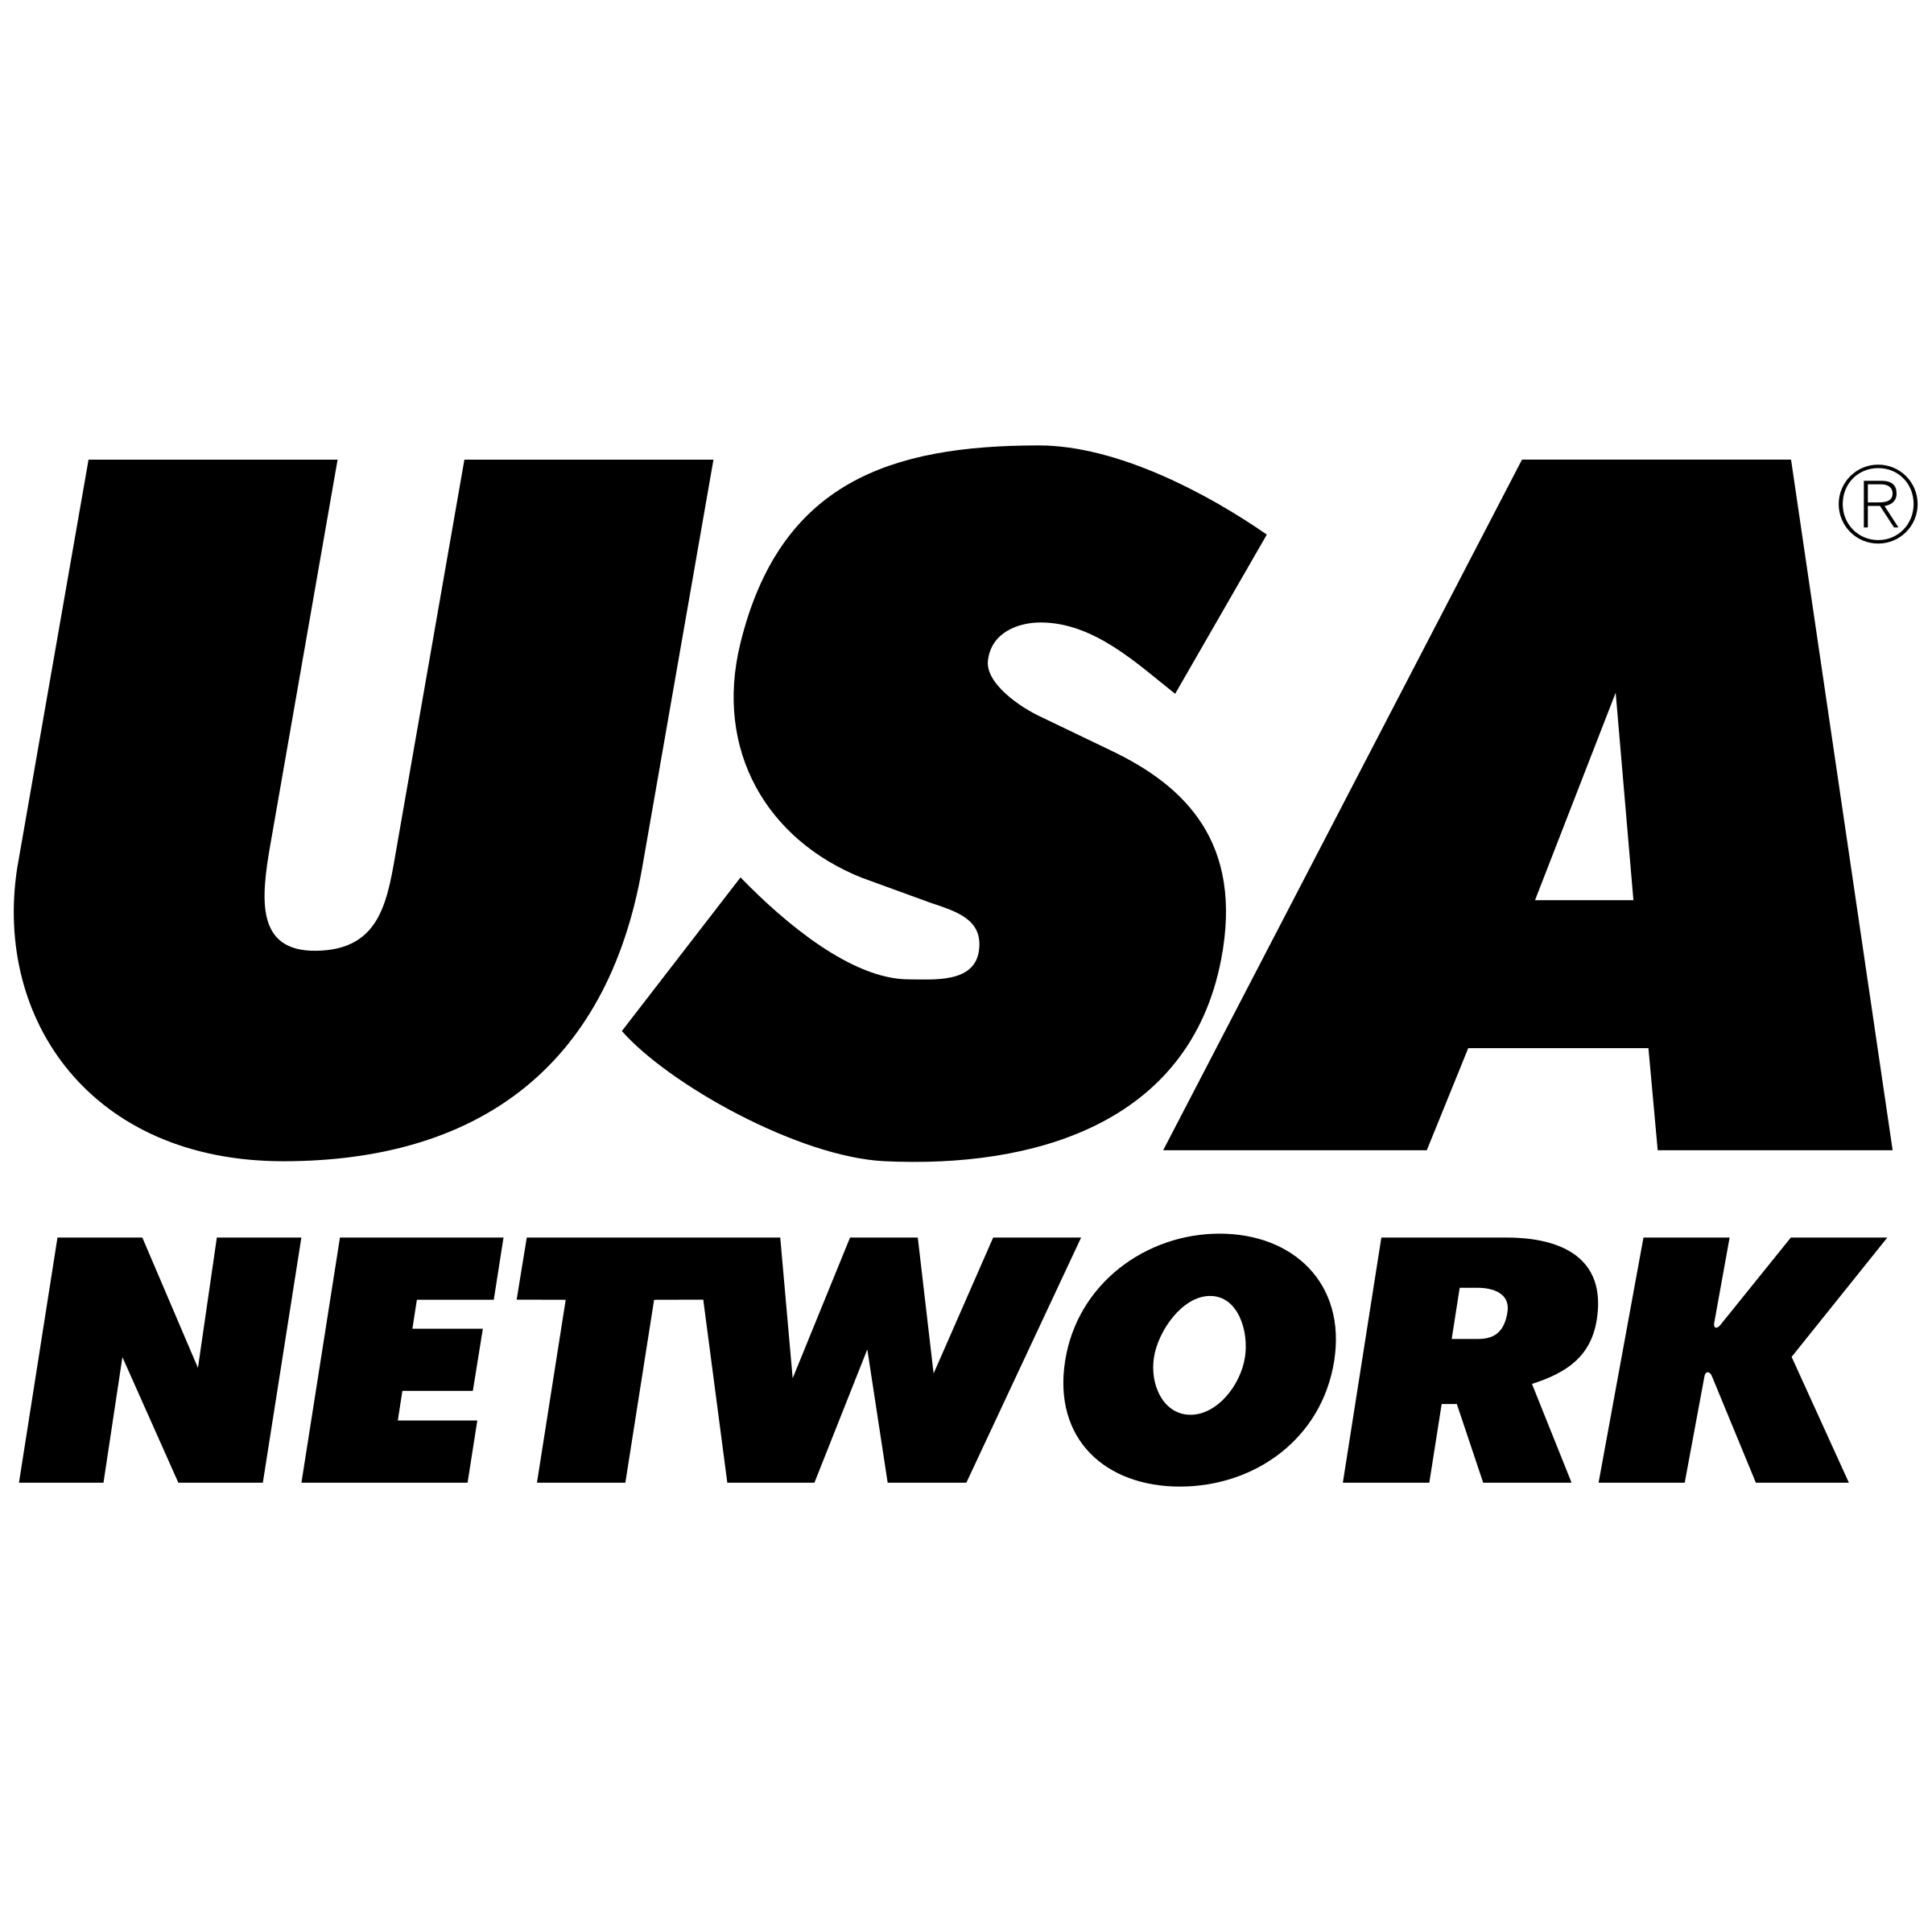 USA Network Logo - USA Network Logo PNG Transparent & SVG Vector - Freebie Supply